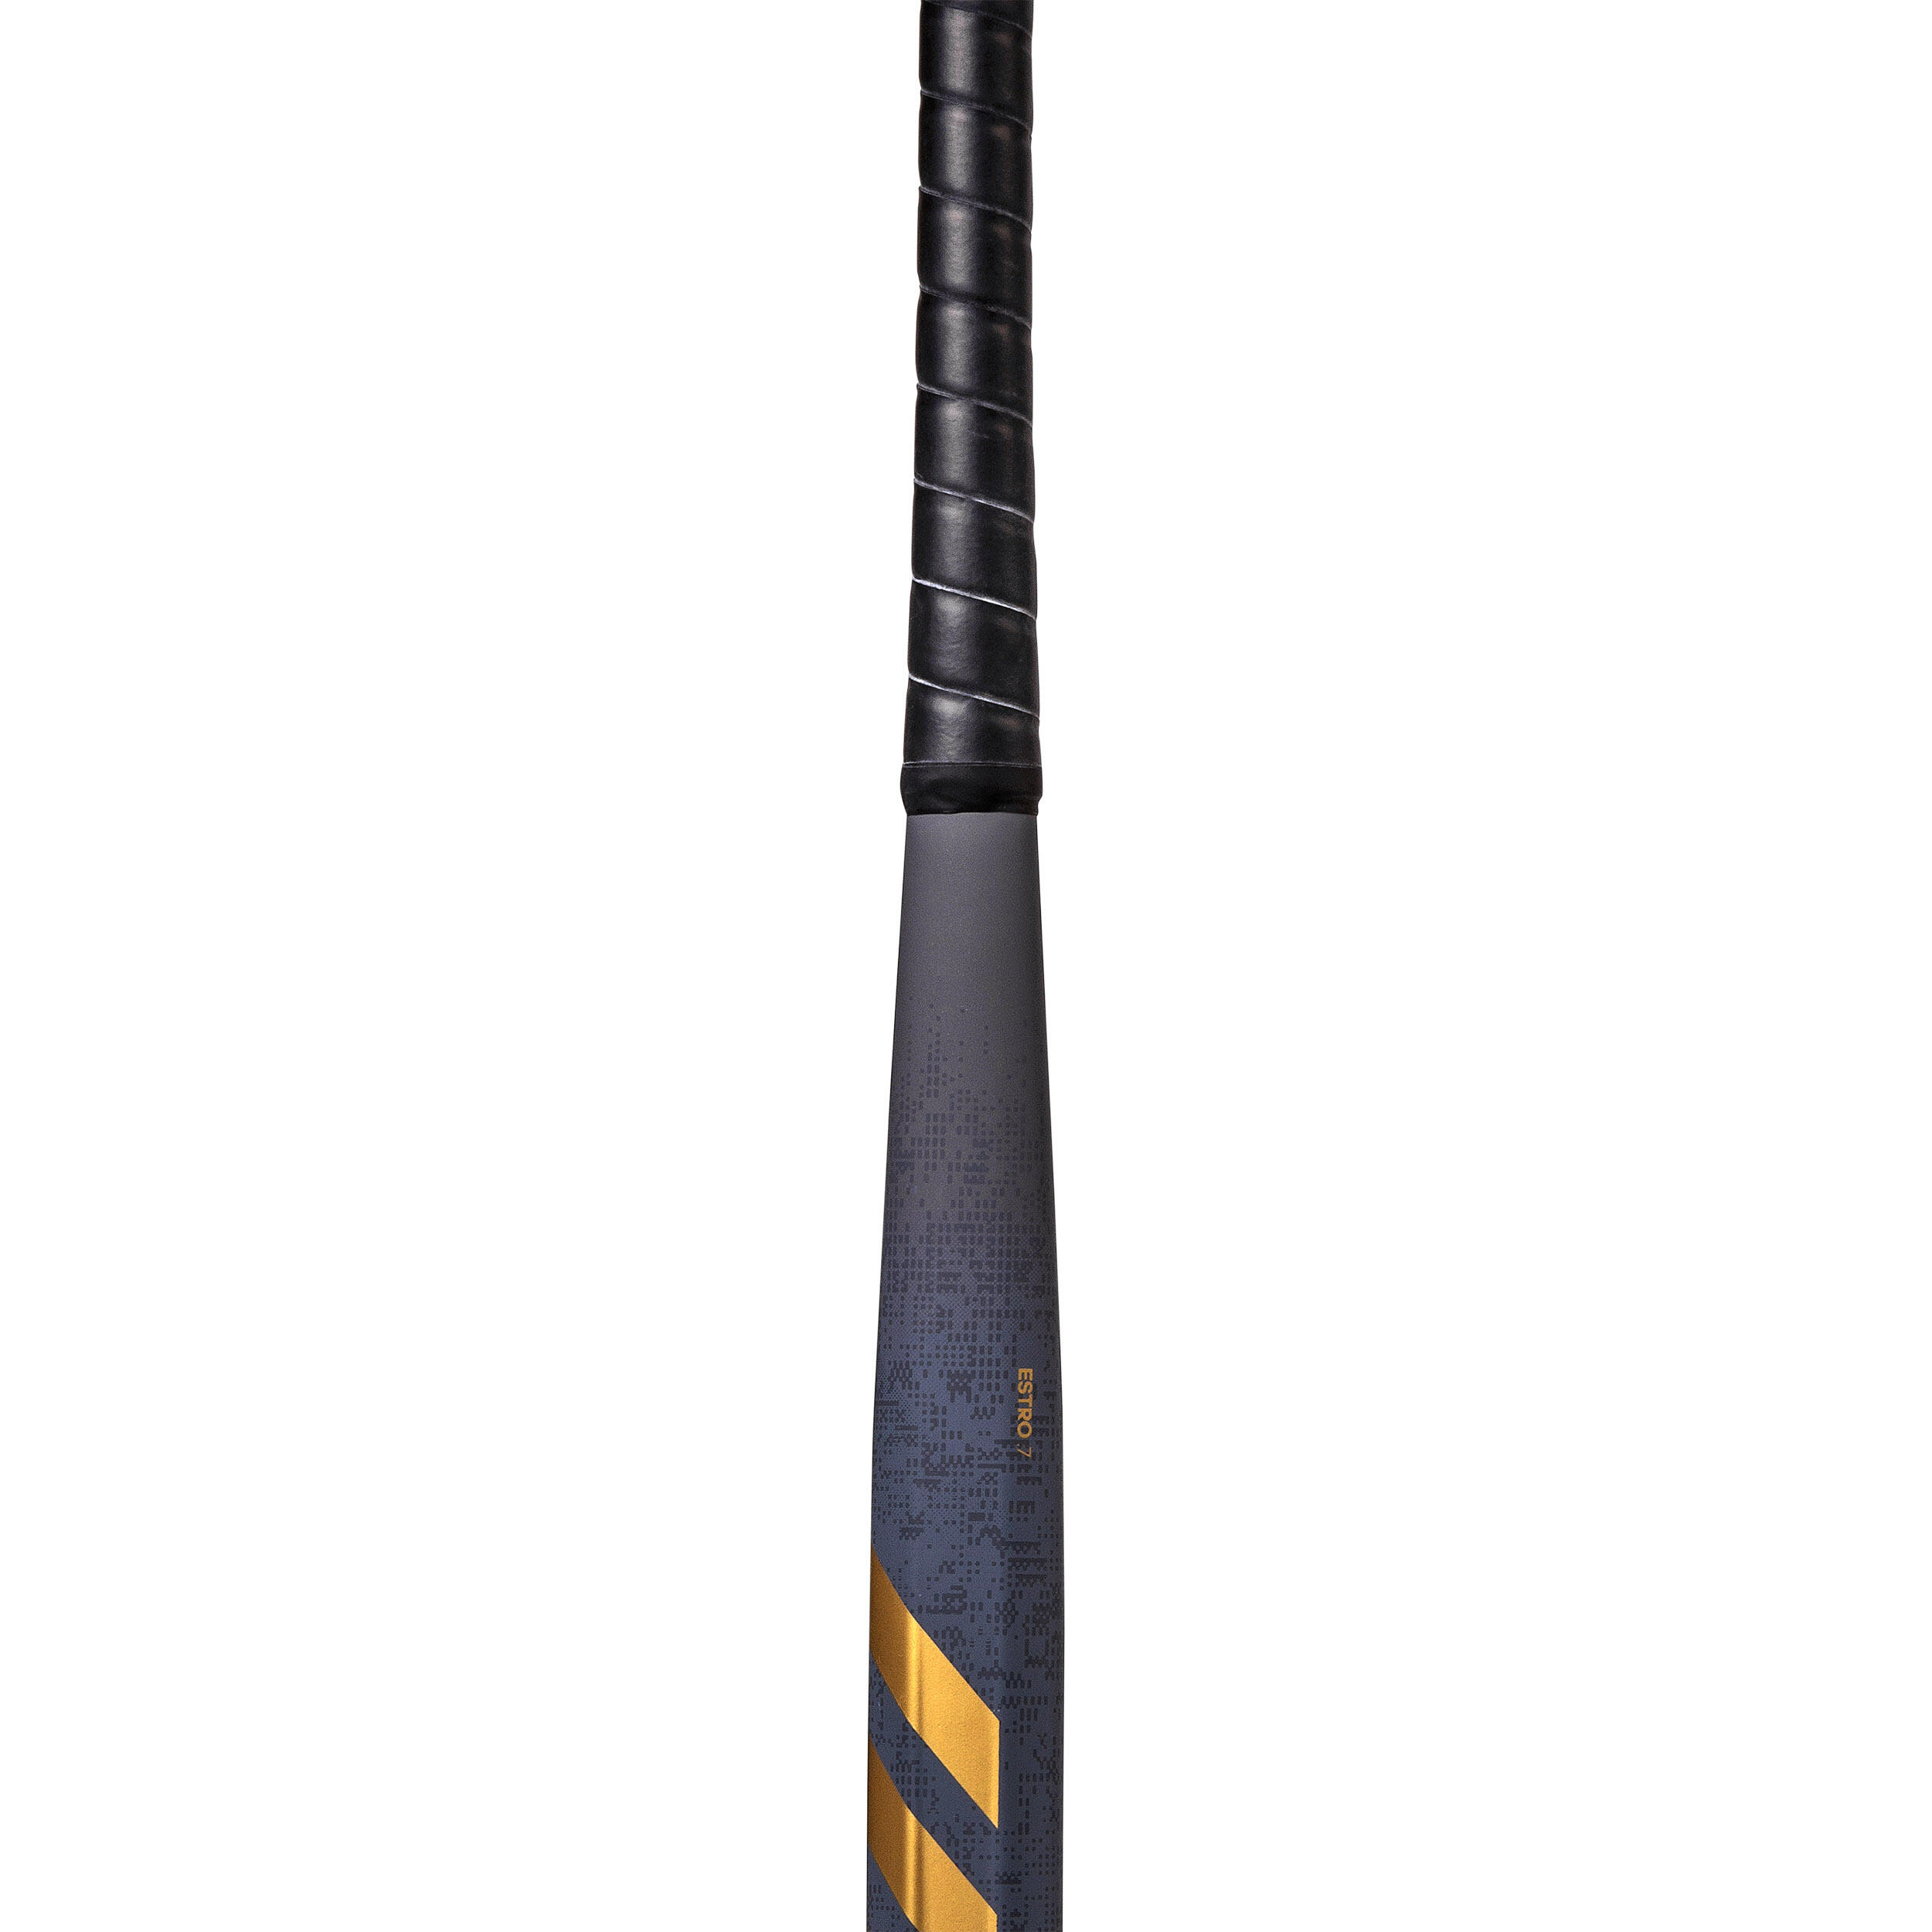 Adult Intermediate 20% Carbon Mid Bow Field Hockey Stick Estro .7 - Black/GoldBlack and gold 6/13